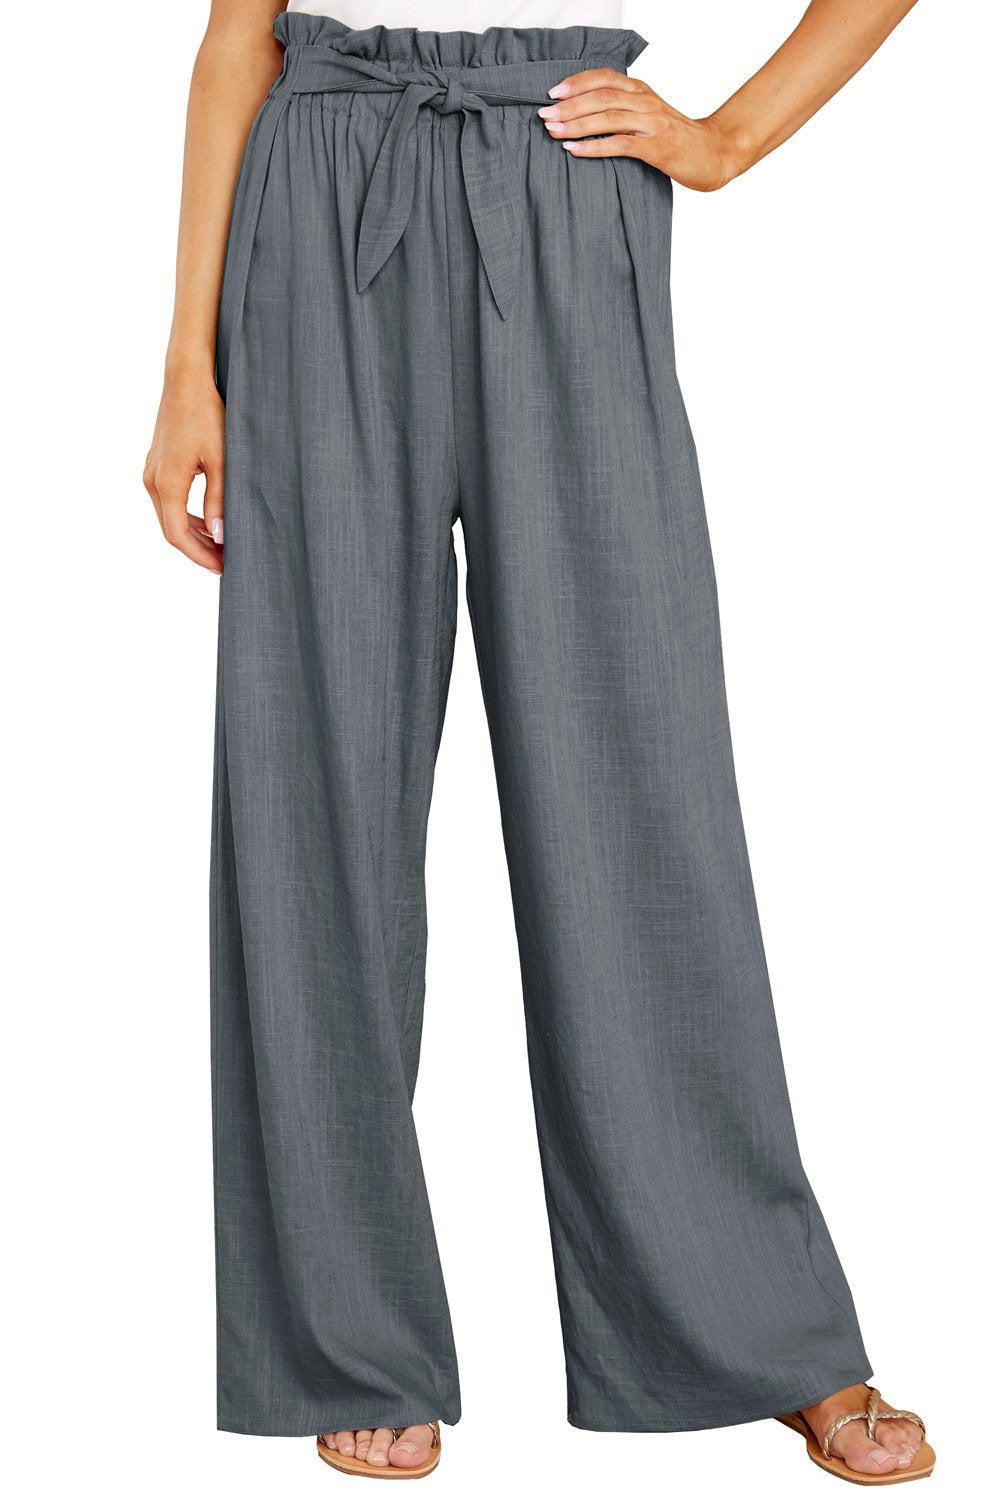 Casual Women Linen Long Pants-Gray-S-Free Shipping at meselling99